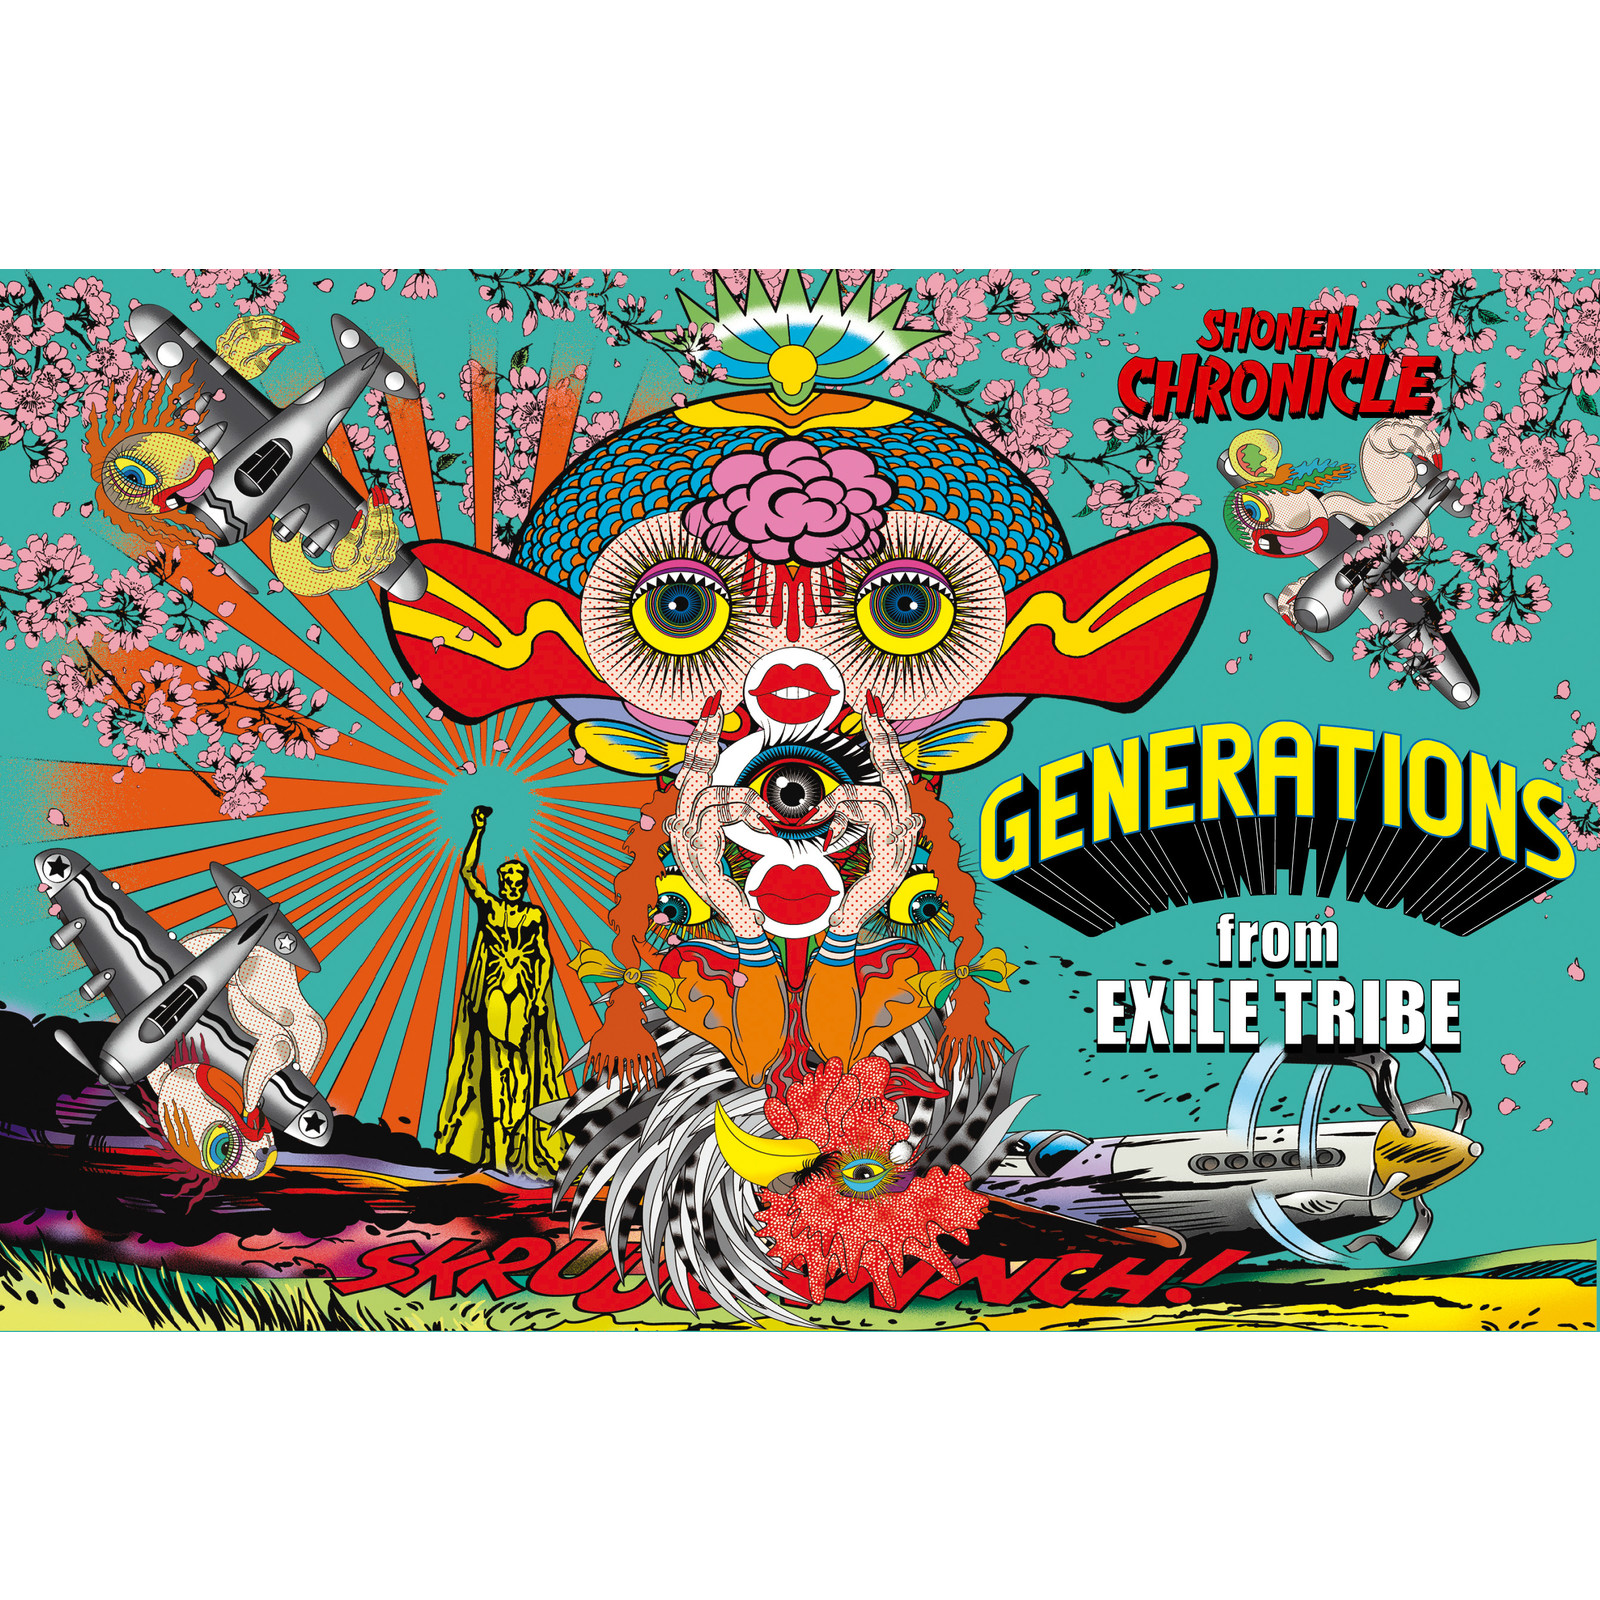 Shonen Chronicle专辑介绍 歌曲歌词下载 Generations From Exile Tribe 歌词131音乐